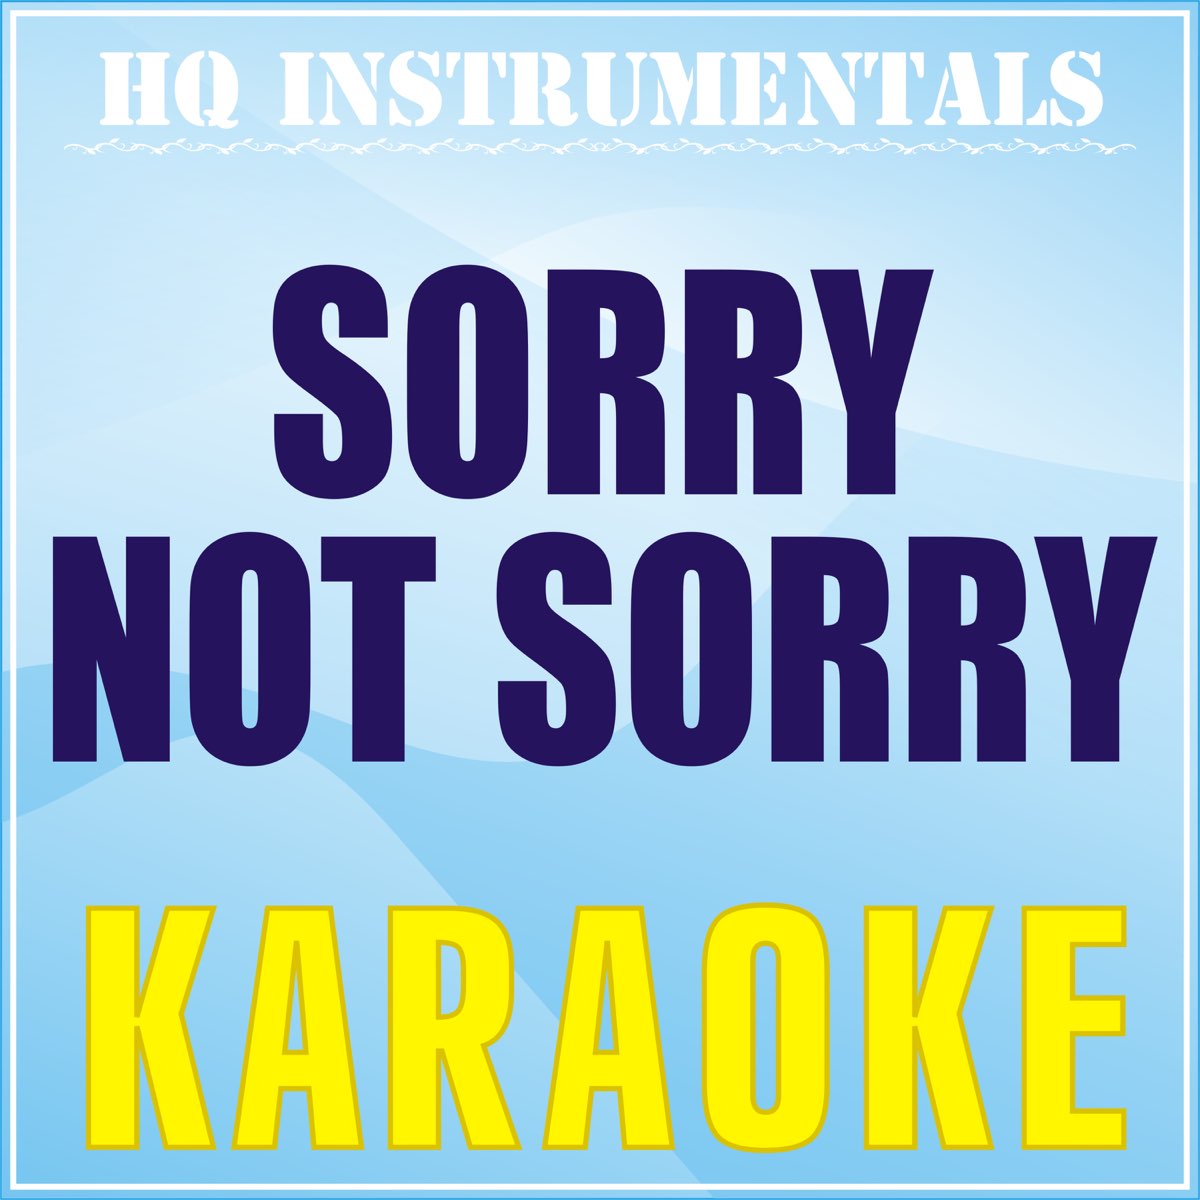 Sorry Not Sorry (Karaoke Instrumental) [Originally Performed by Demi Lovato]  - Single - Album by HQ INSTRUMENTALS - Apple Music